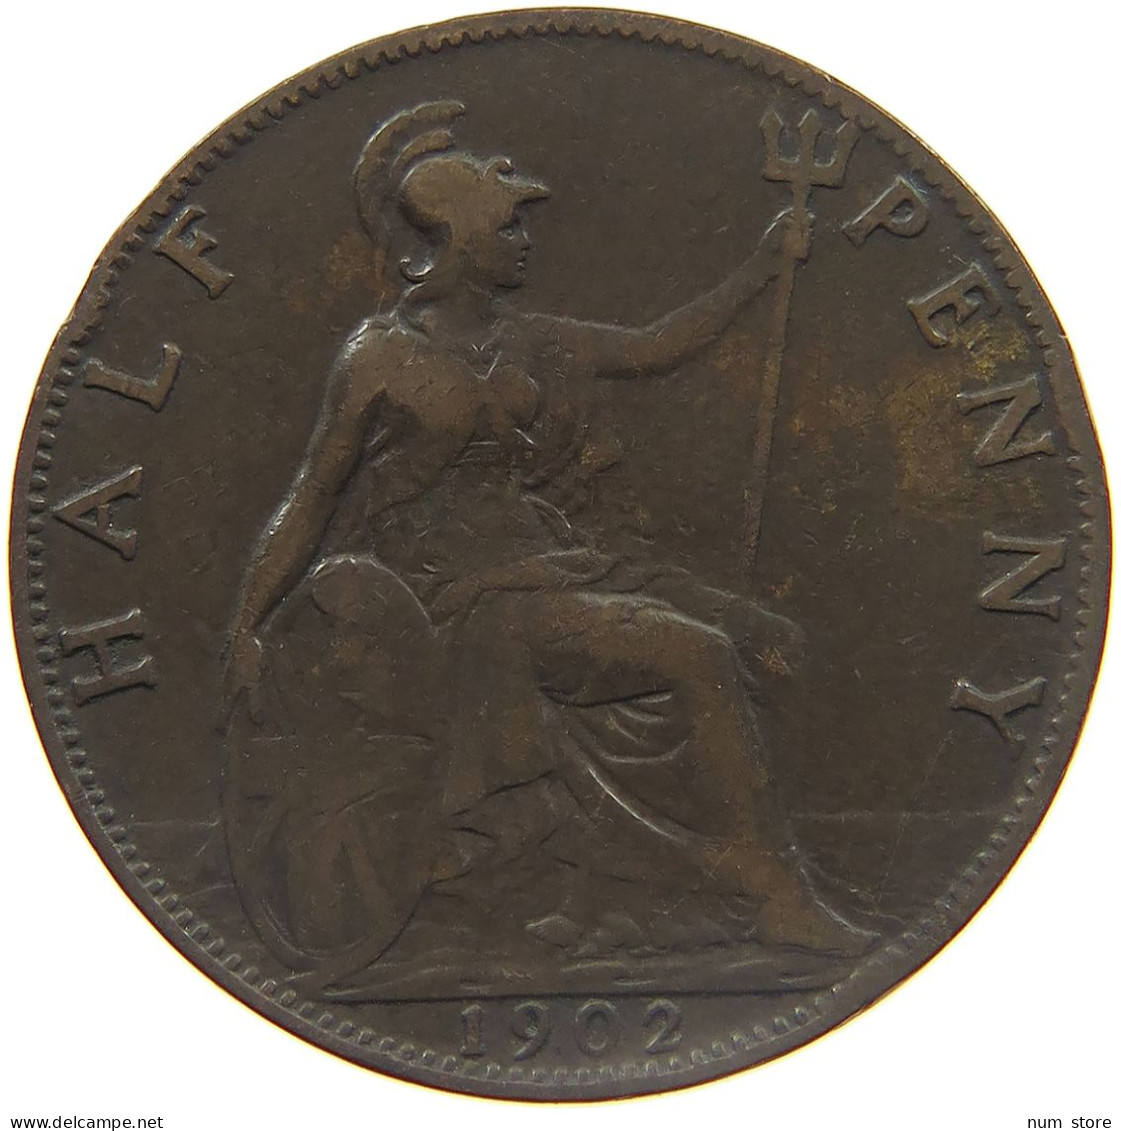 GREAT BRITAIN HALFPENNY 1902 EDWARD VII., 1901 - 1910 #MA 023397 - K. 1/2 Crown